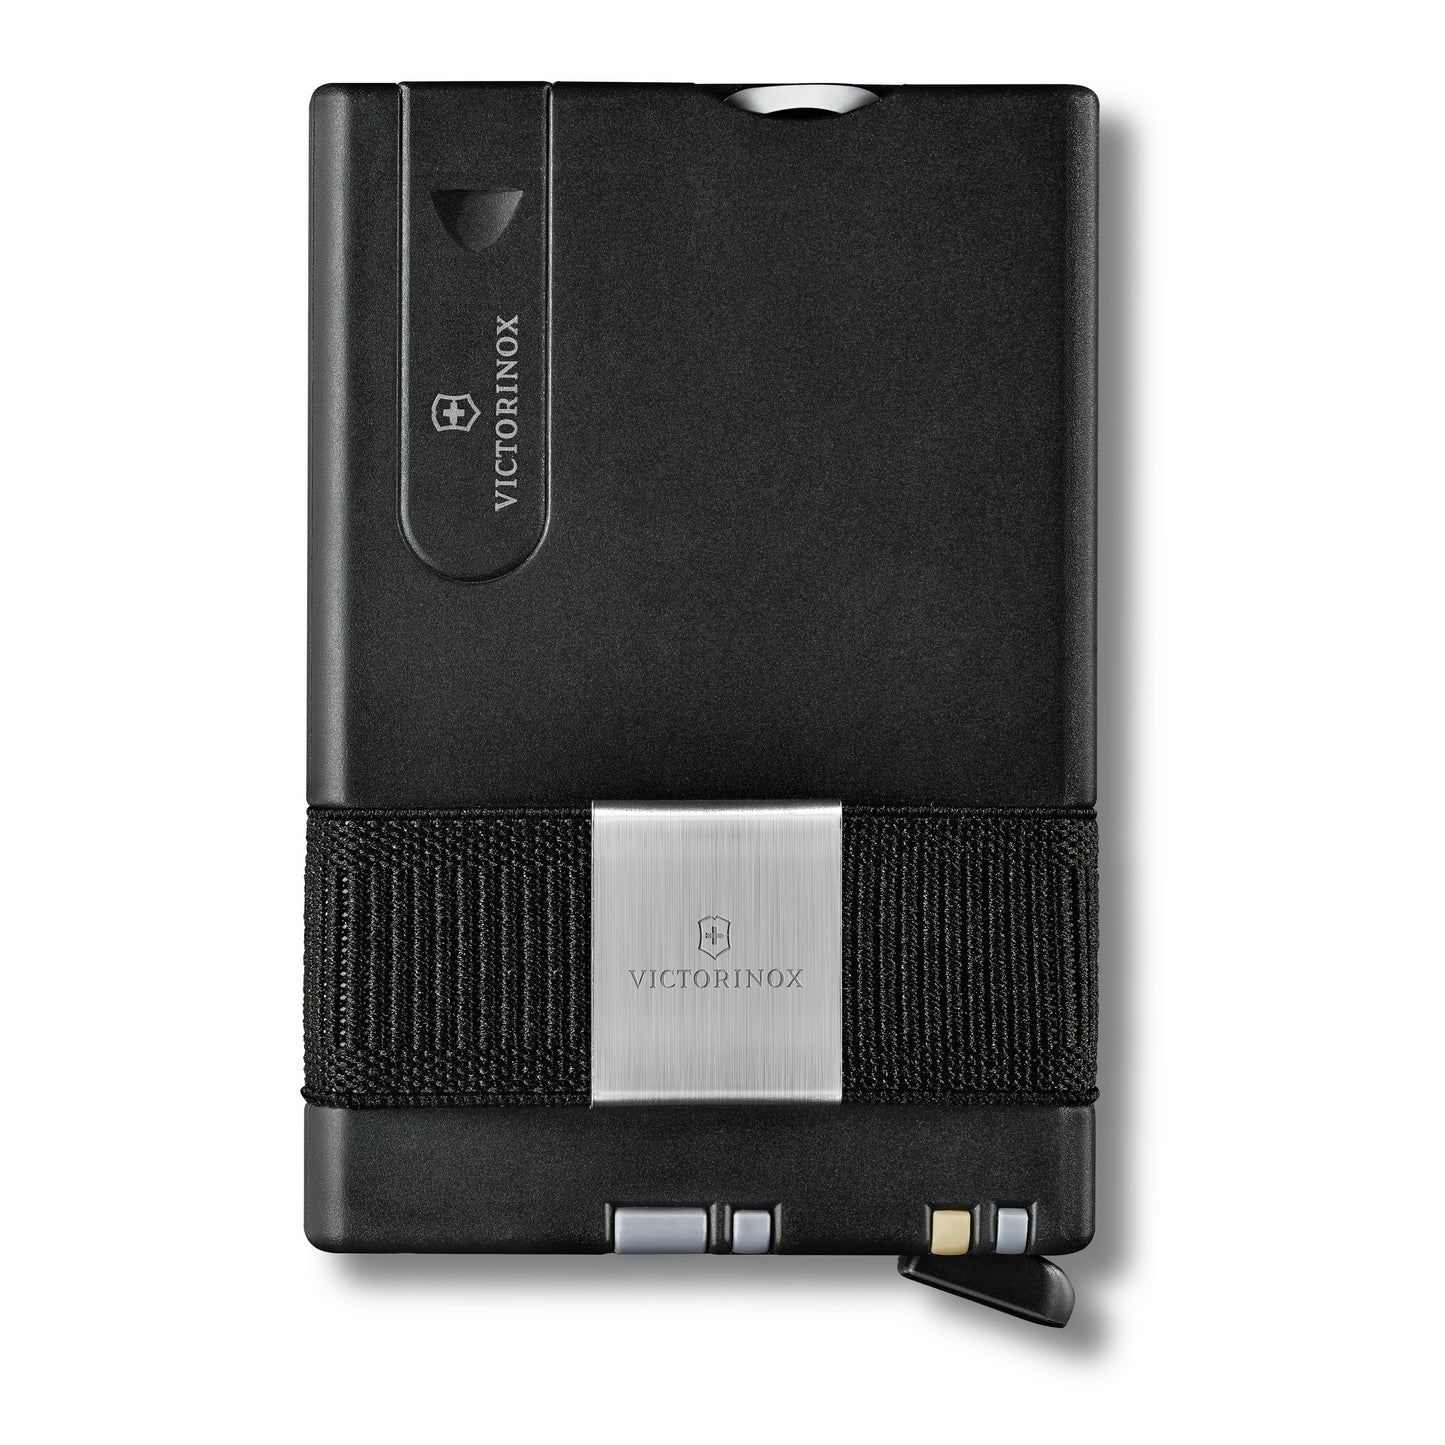 Victorinox Smart Card Wallet GOLD/BLACK